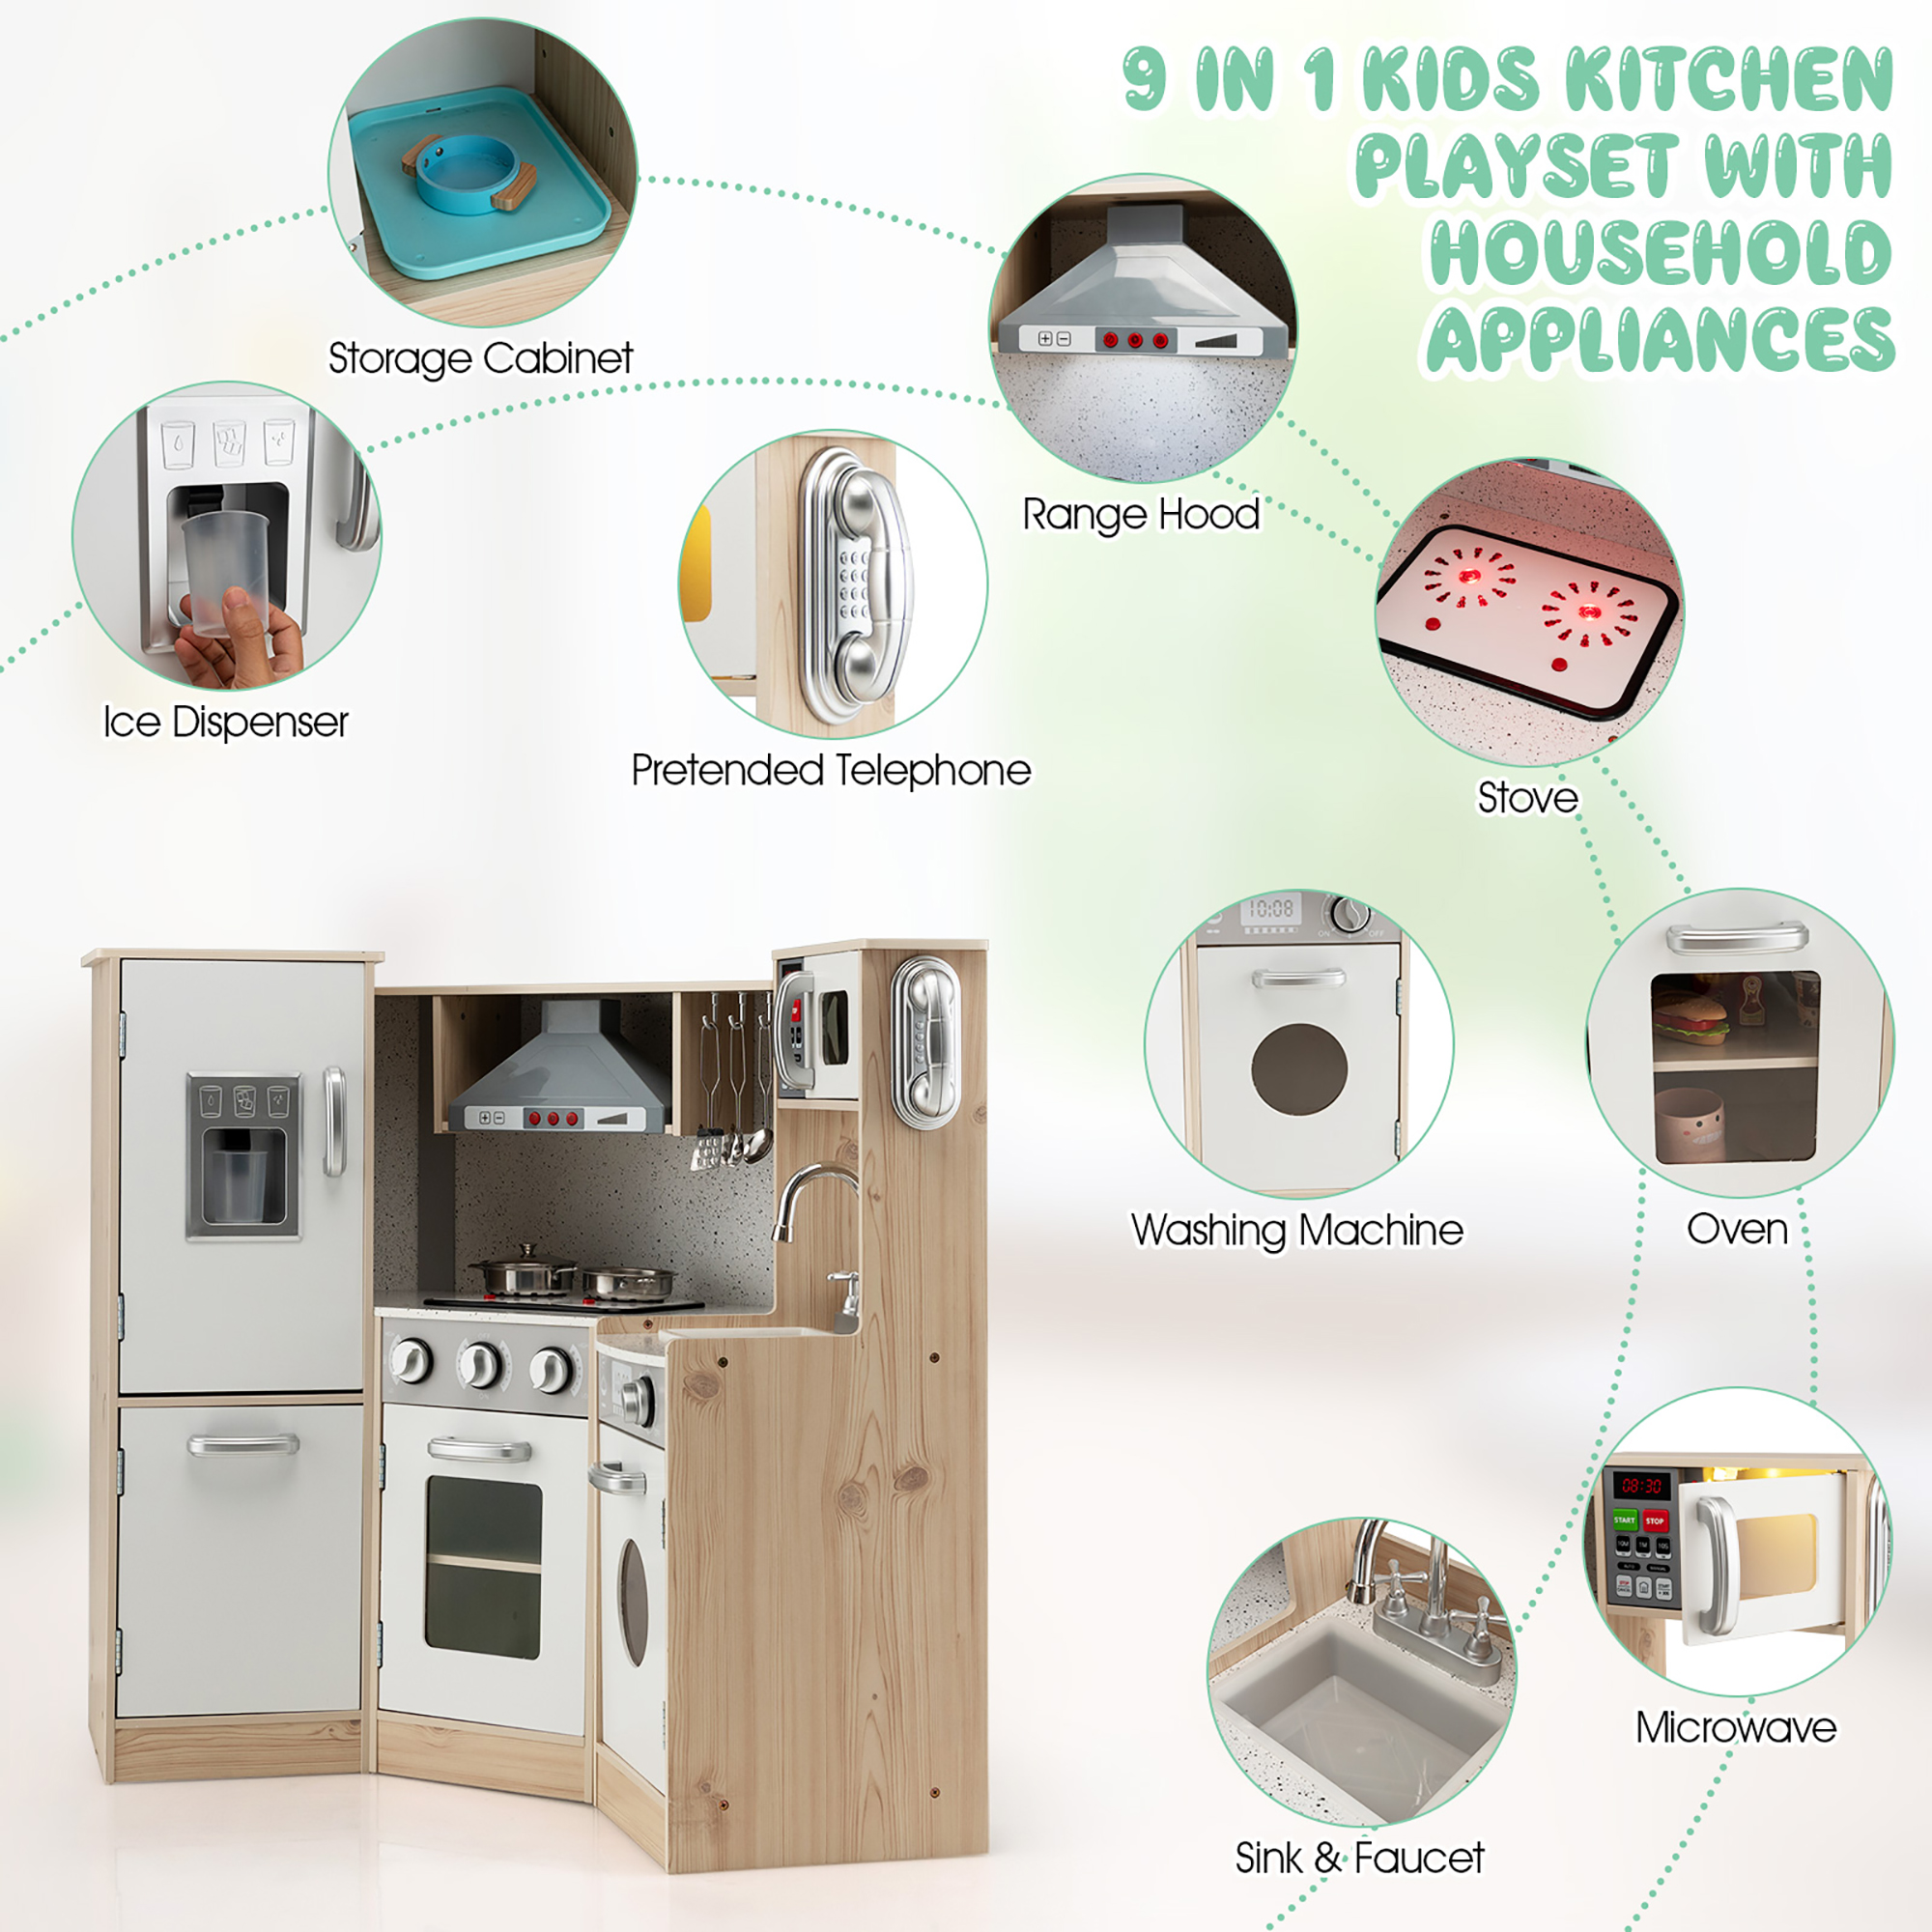 Costway Kids Corner Wooden Kitchen Playset Pretend Cooking Toy w/ Cookware Accessories